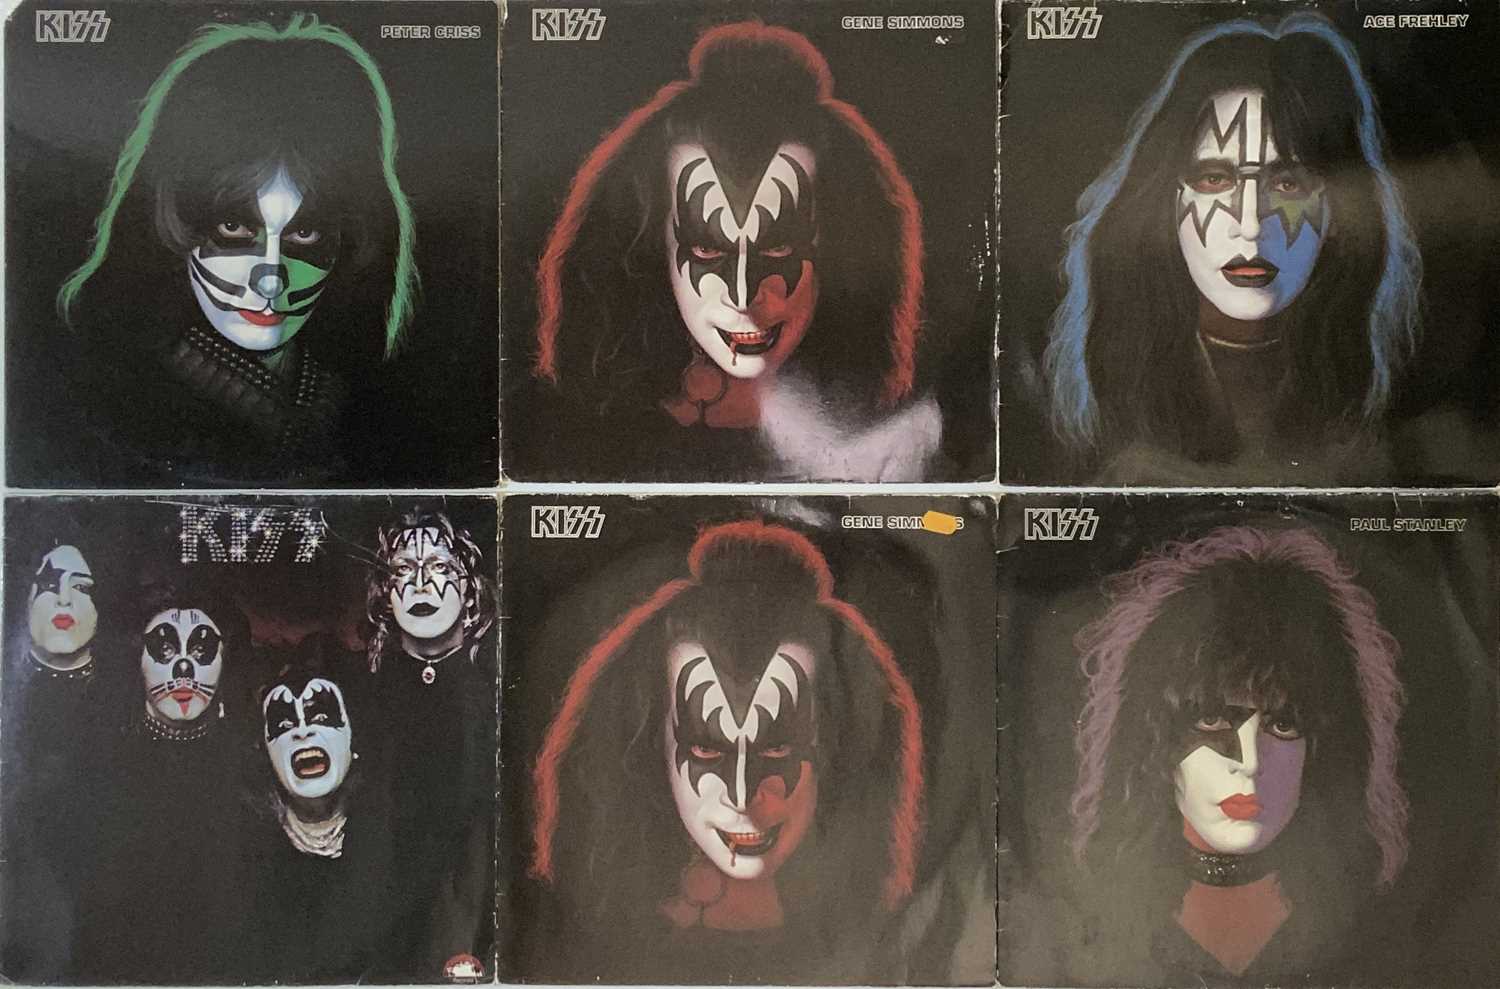 Lot 683 - Kiss - LP Collection